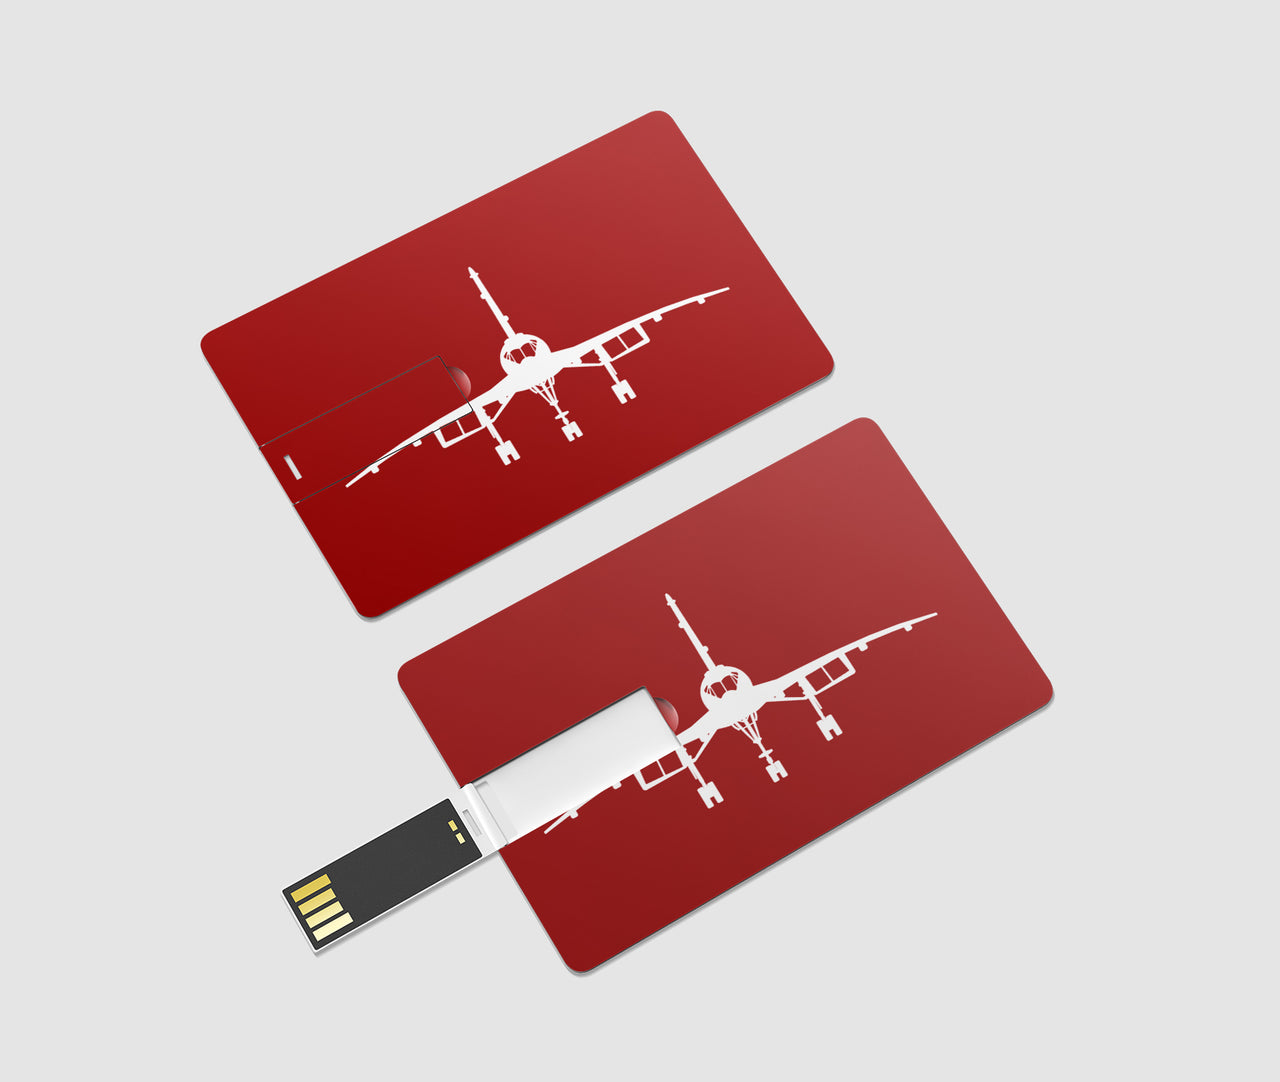 Concorde Silhouette Designed USB Cards